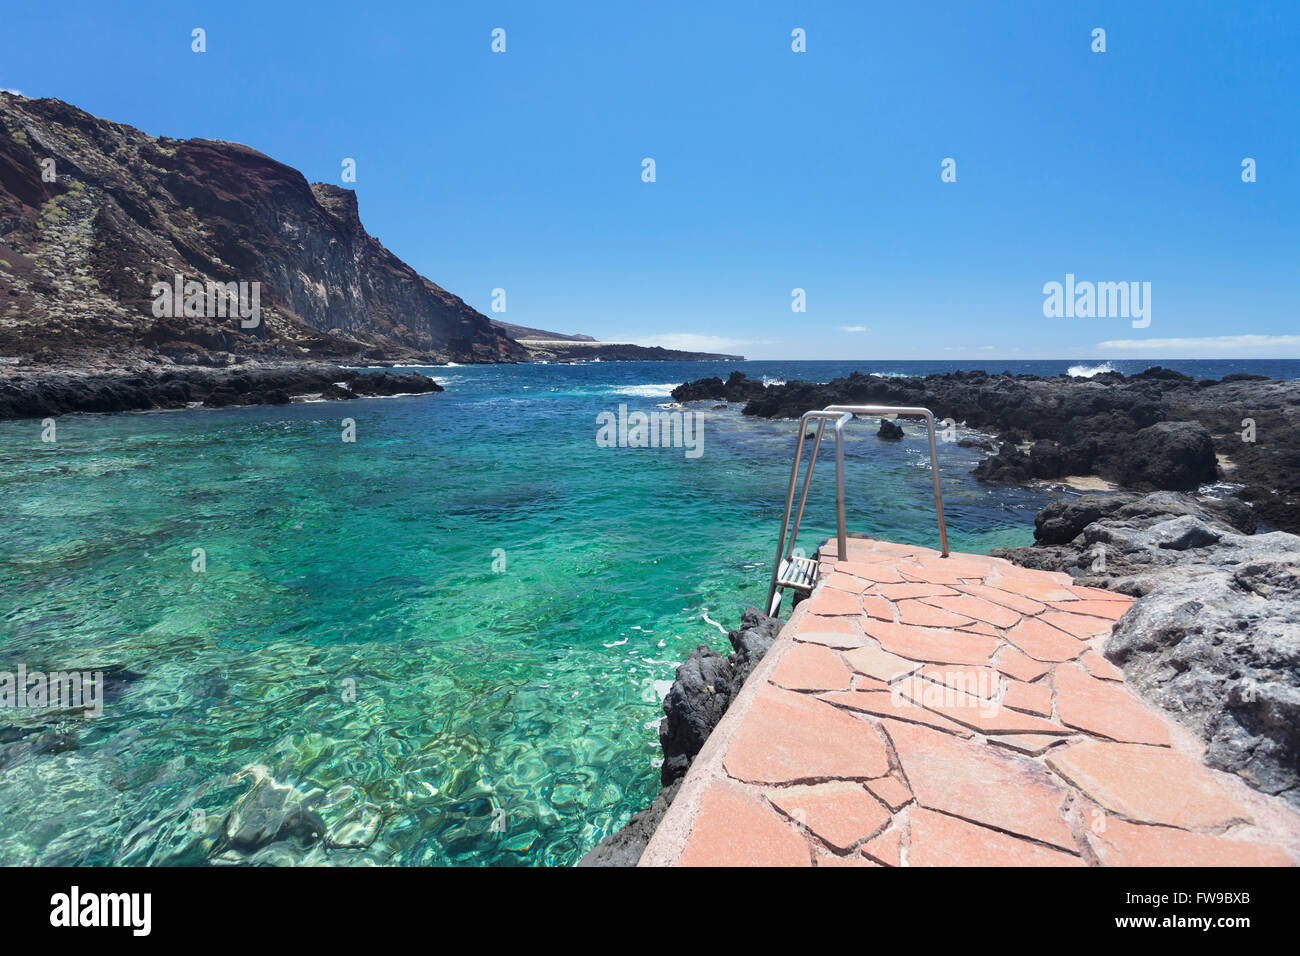 Seaside natural pool in the Bay of Tacaron, Cala de Tacaron, El Hierro, Canary Islands, Spain Stock Photo